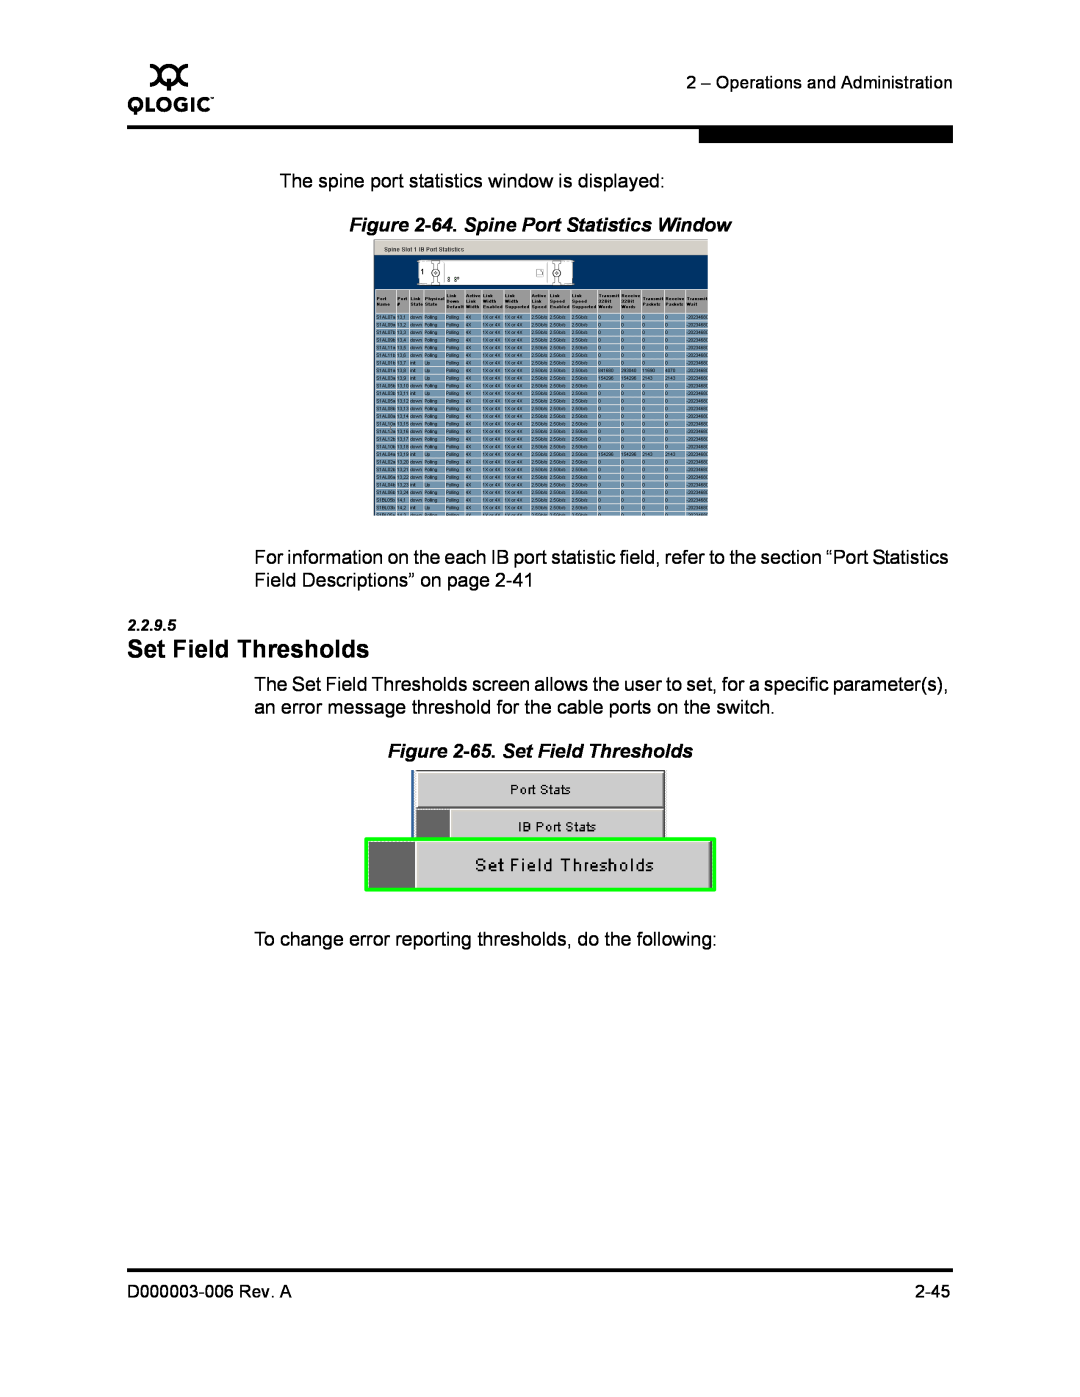 Q-Logic 9000 manual 64. Spine Port Statistics Window, 65. Set Field Thresholds 